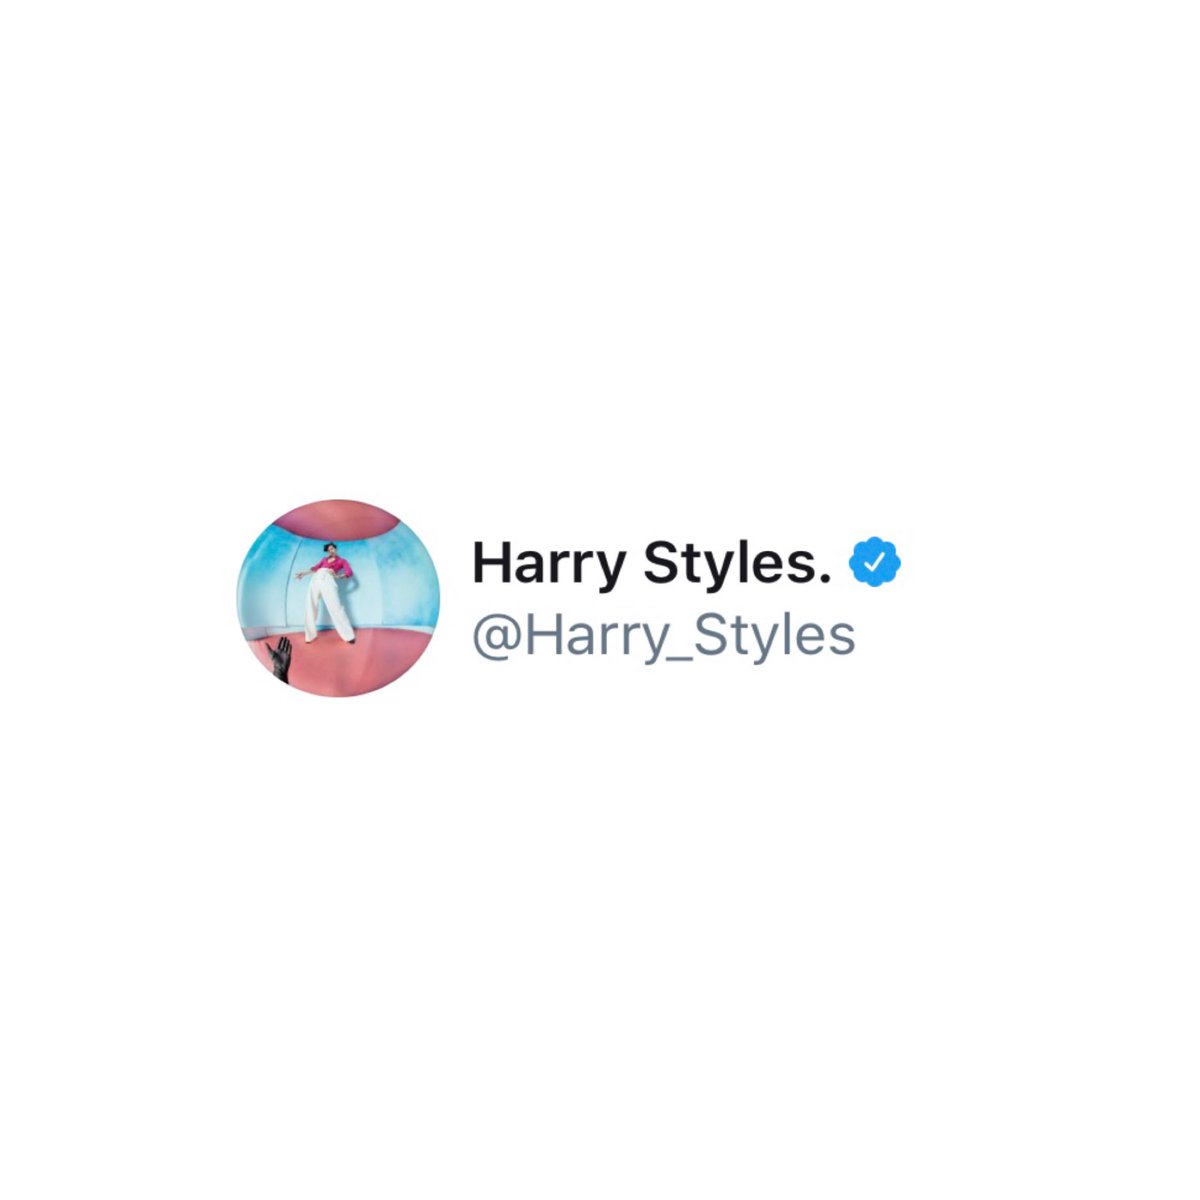 harry’s tweets as zodiac signs. a thread: